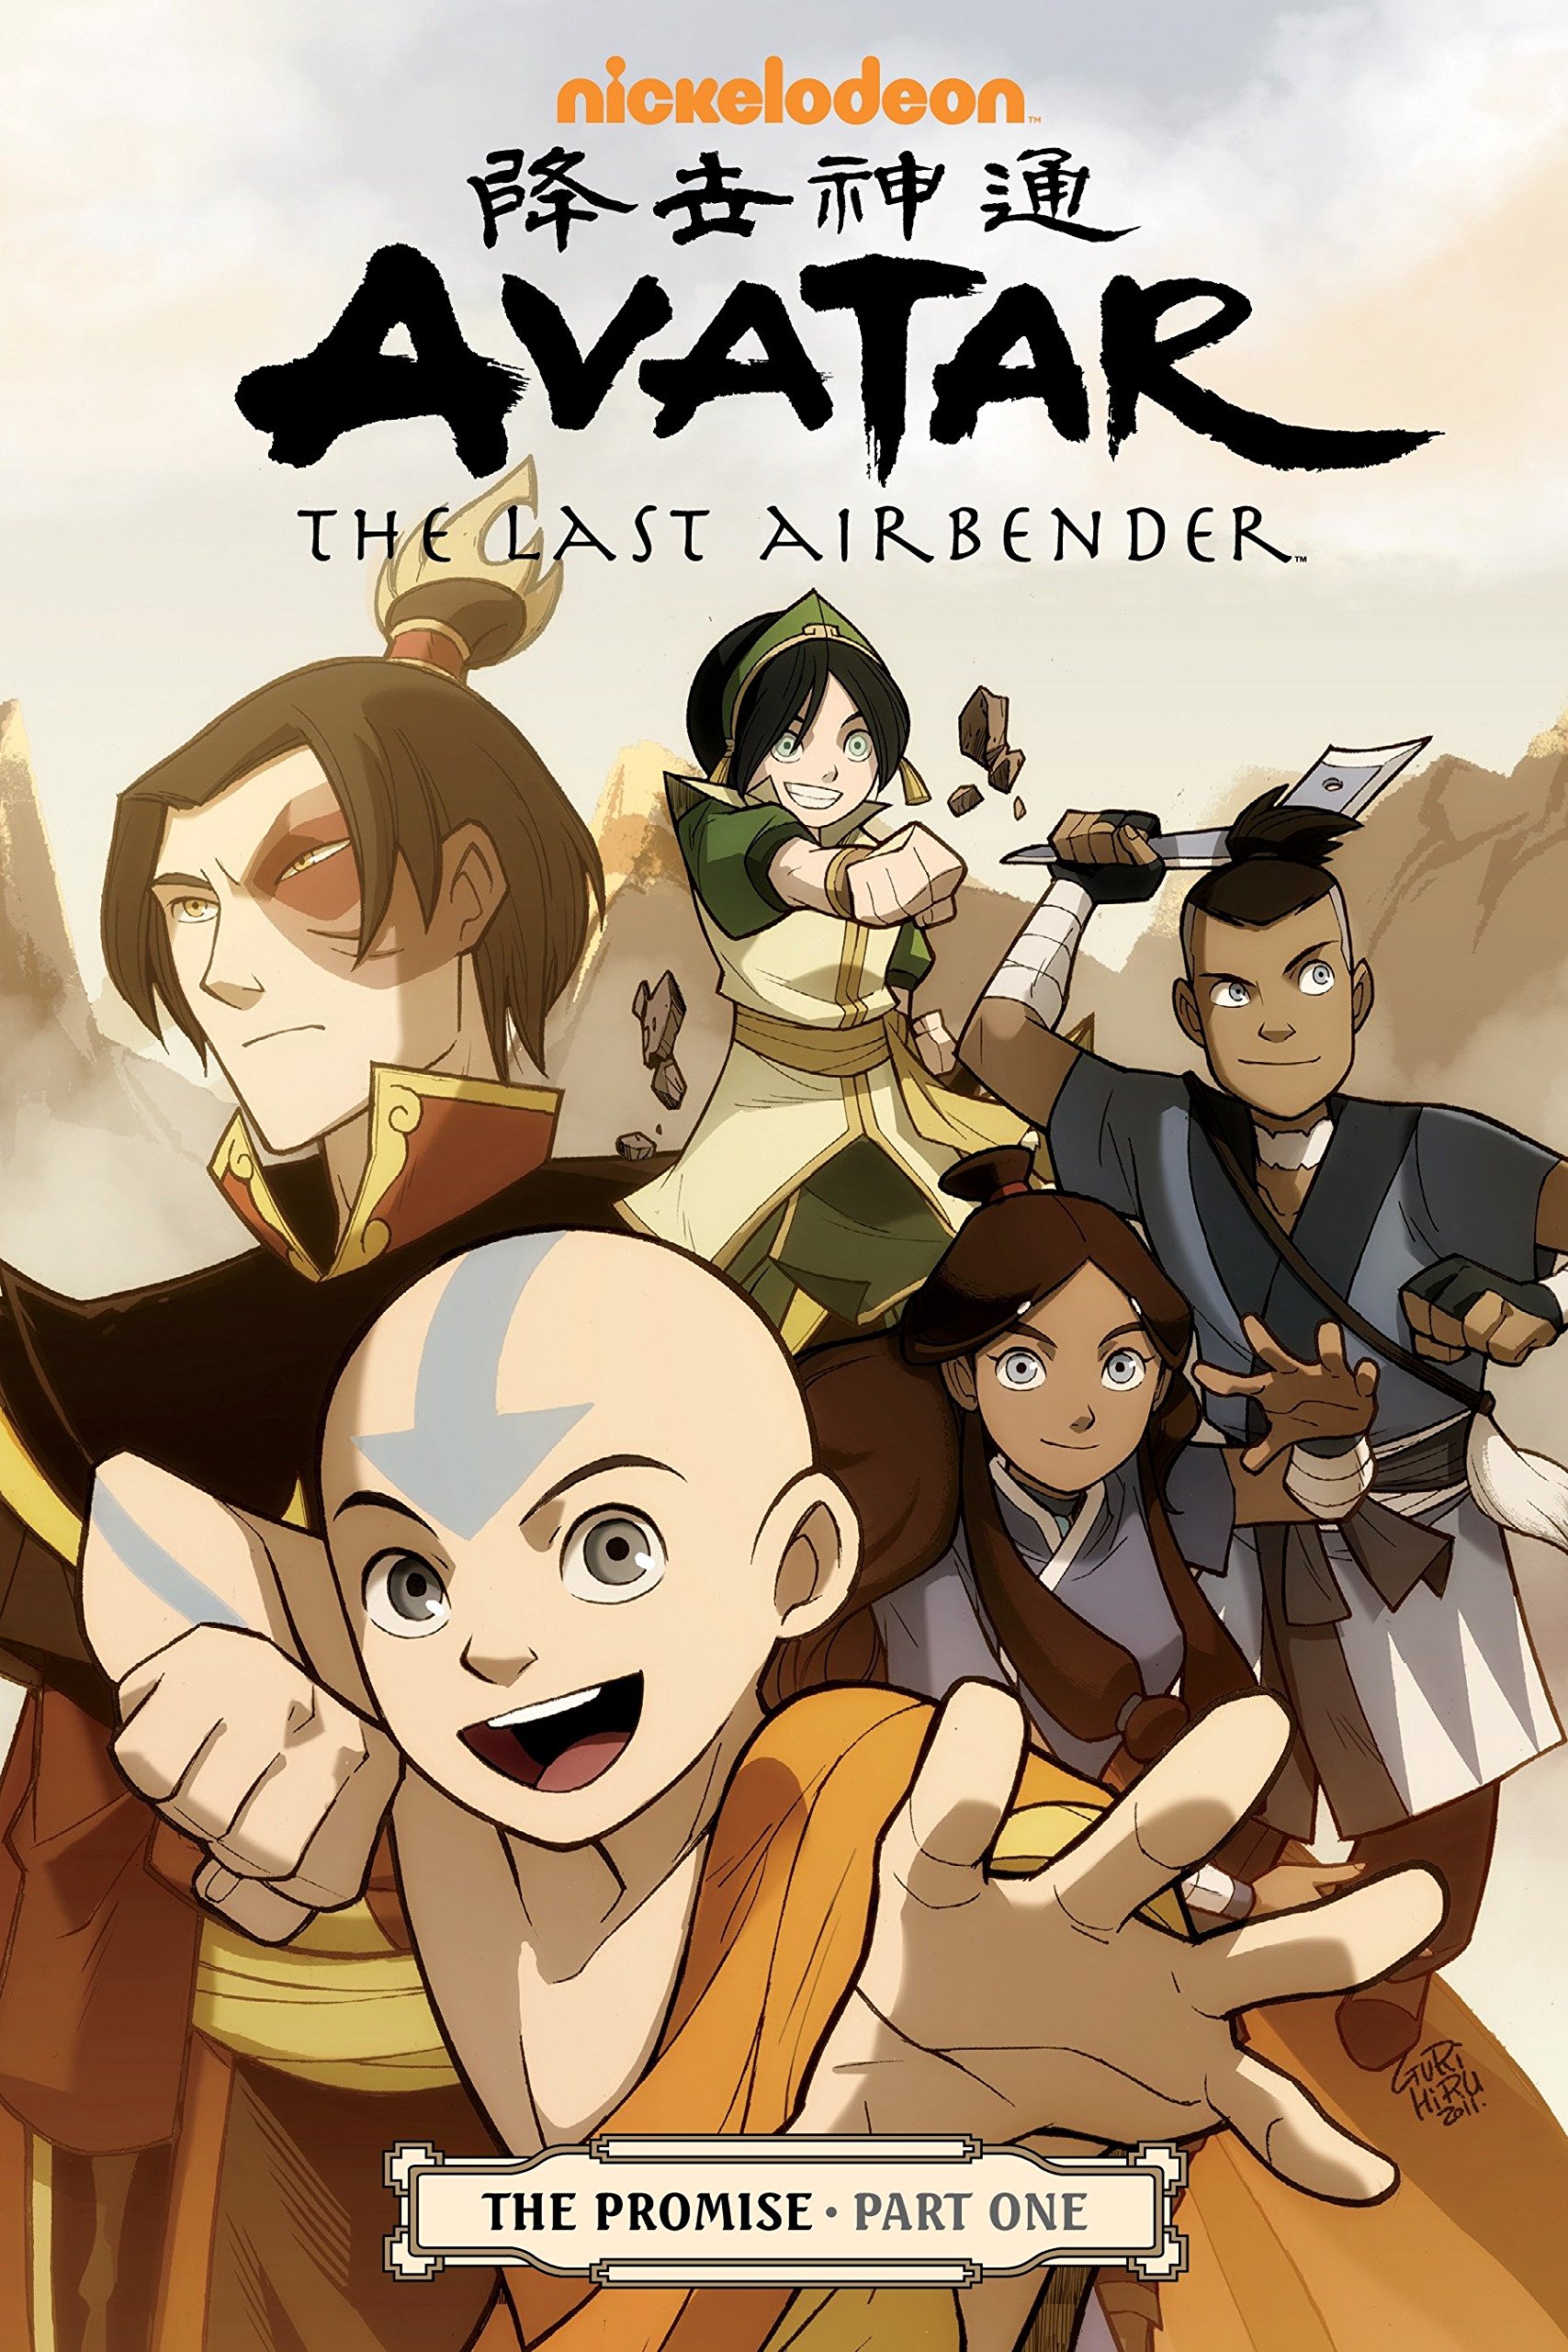 Mua Avatar: The Last Airbender: The Promise, Part 1 trên Amazon Mỹ ...